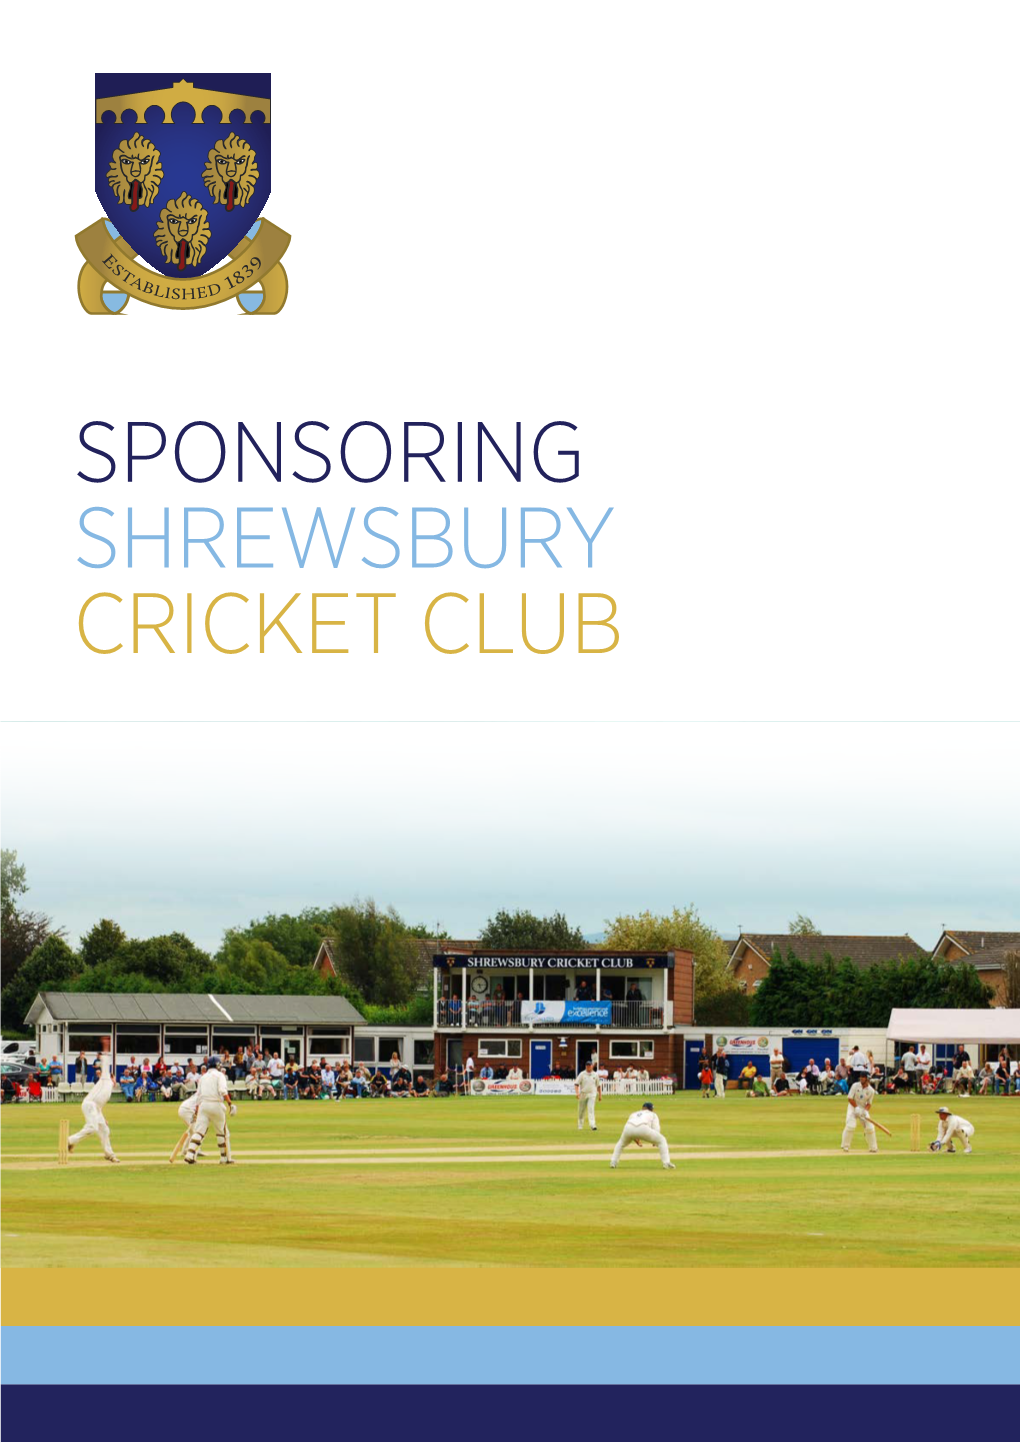 Sponsoring Shrewsbury Cricket Club Sponsoring Sponsoring Shrewsbury Shrewsbury Cricket Club Cricket Club Be Part of Shropshire’S Most Successful Ever Cricket Club